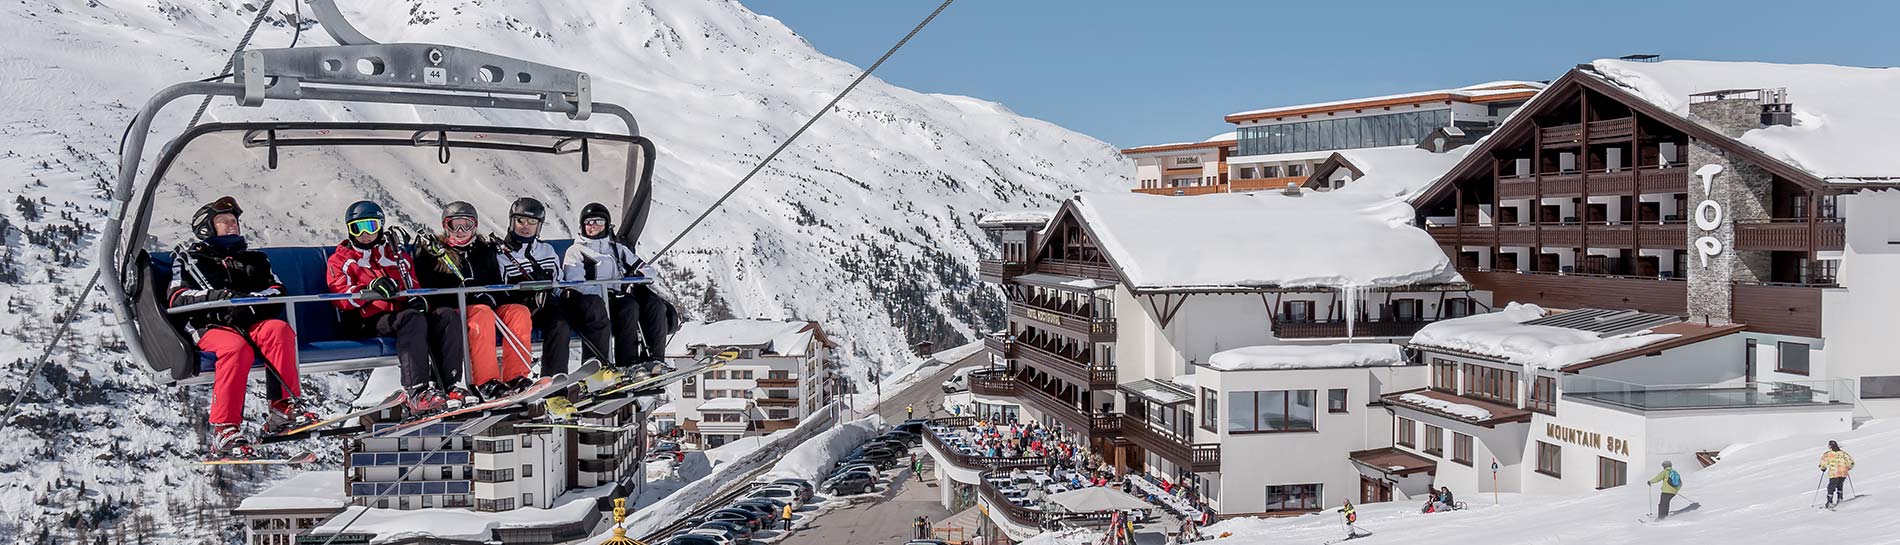 TOP Hochgurgl 5-star superior ski hotel TOP Hotel Hochgurgl ski resort Obergurgl Hochgurgl Tyrol Austria Niche Destinations